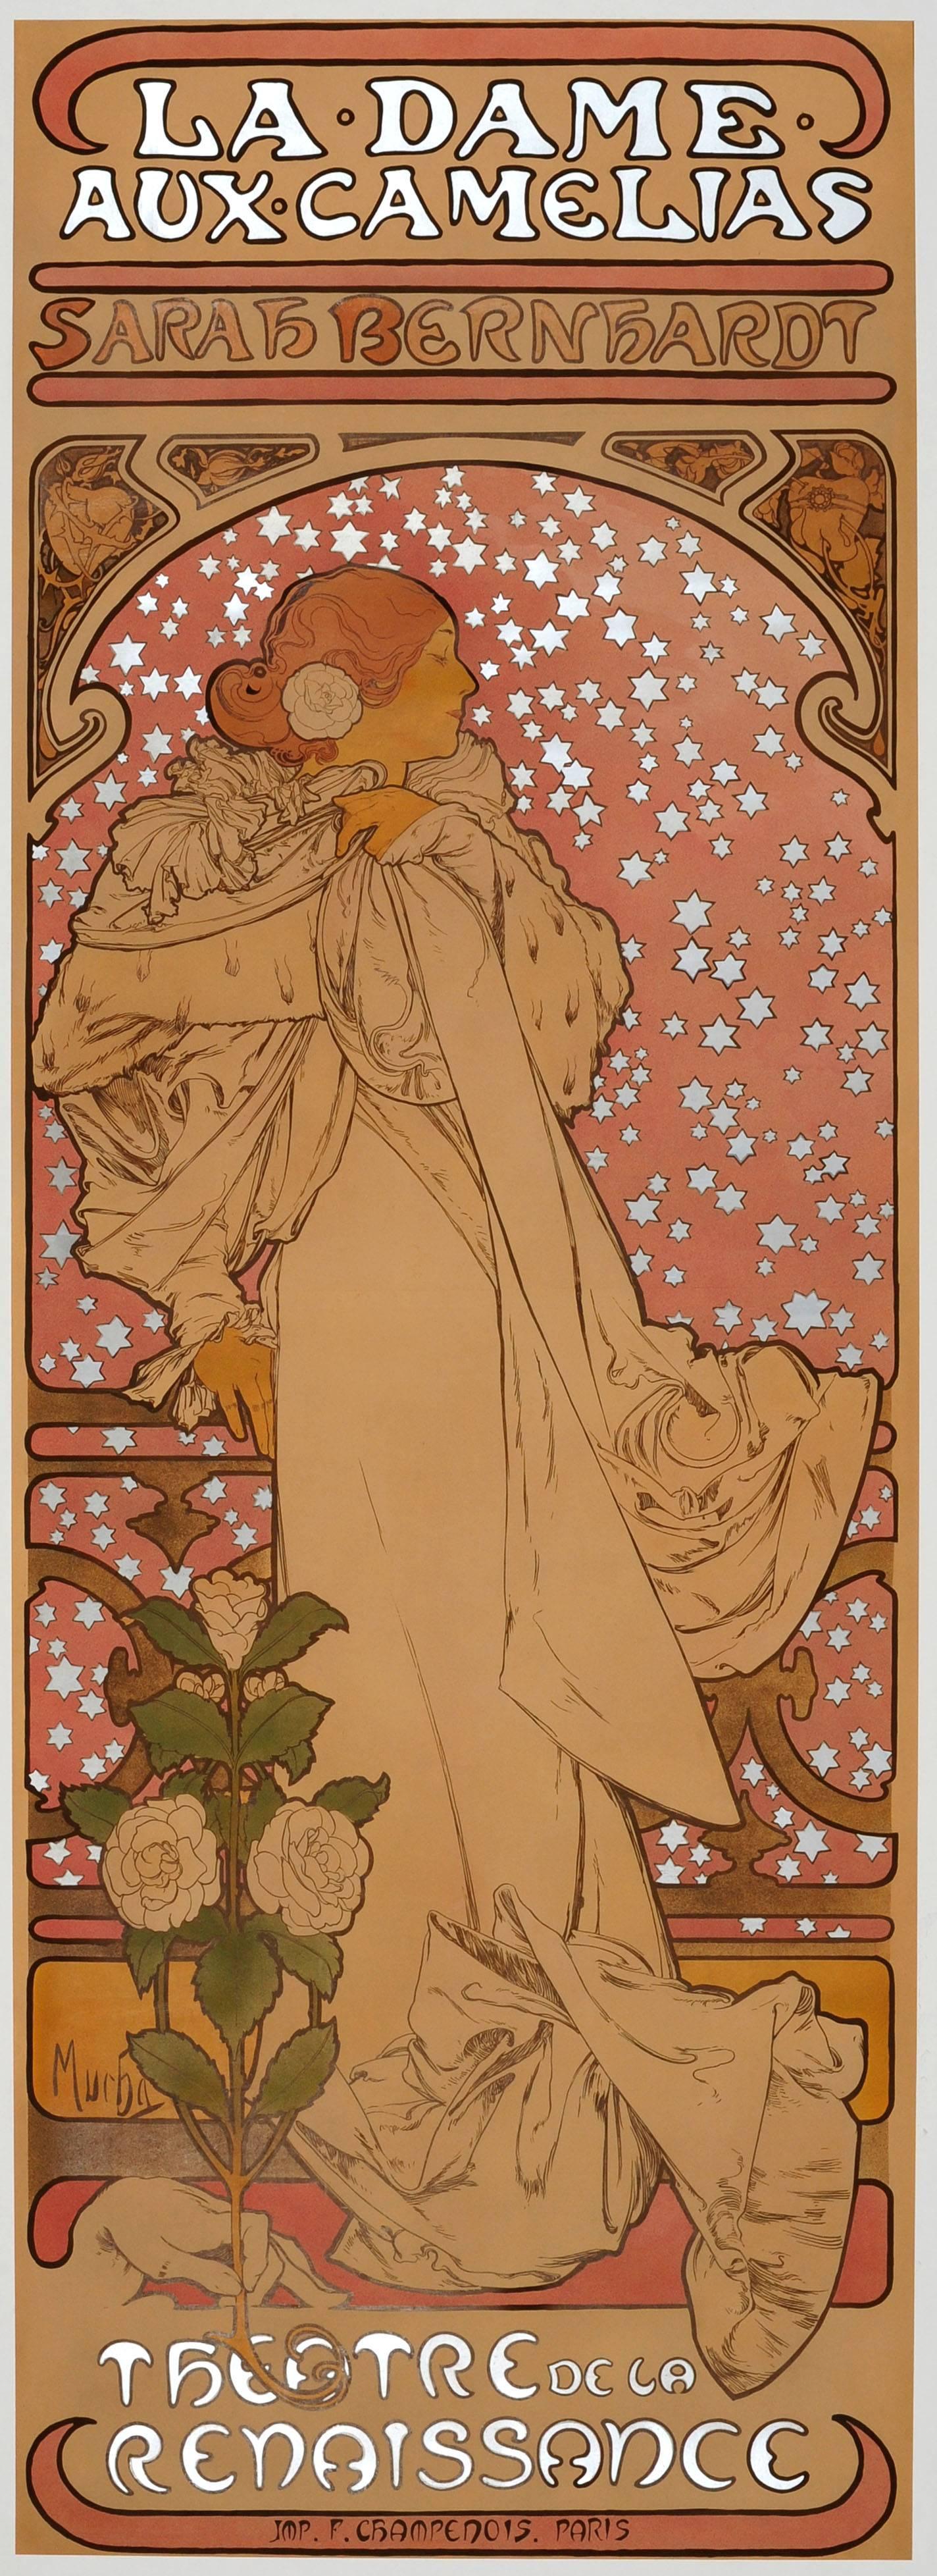 Alphonse Mucha Print - Original 1896 Poster By A. Mucha - La Dame Aux Camelias Starring Sarah Bernhardt